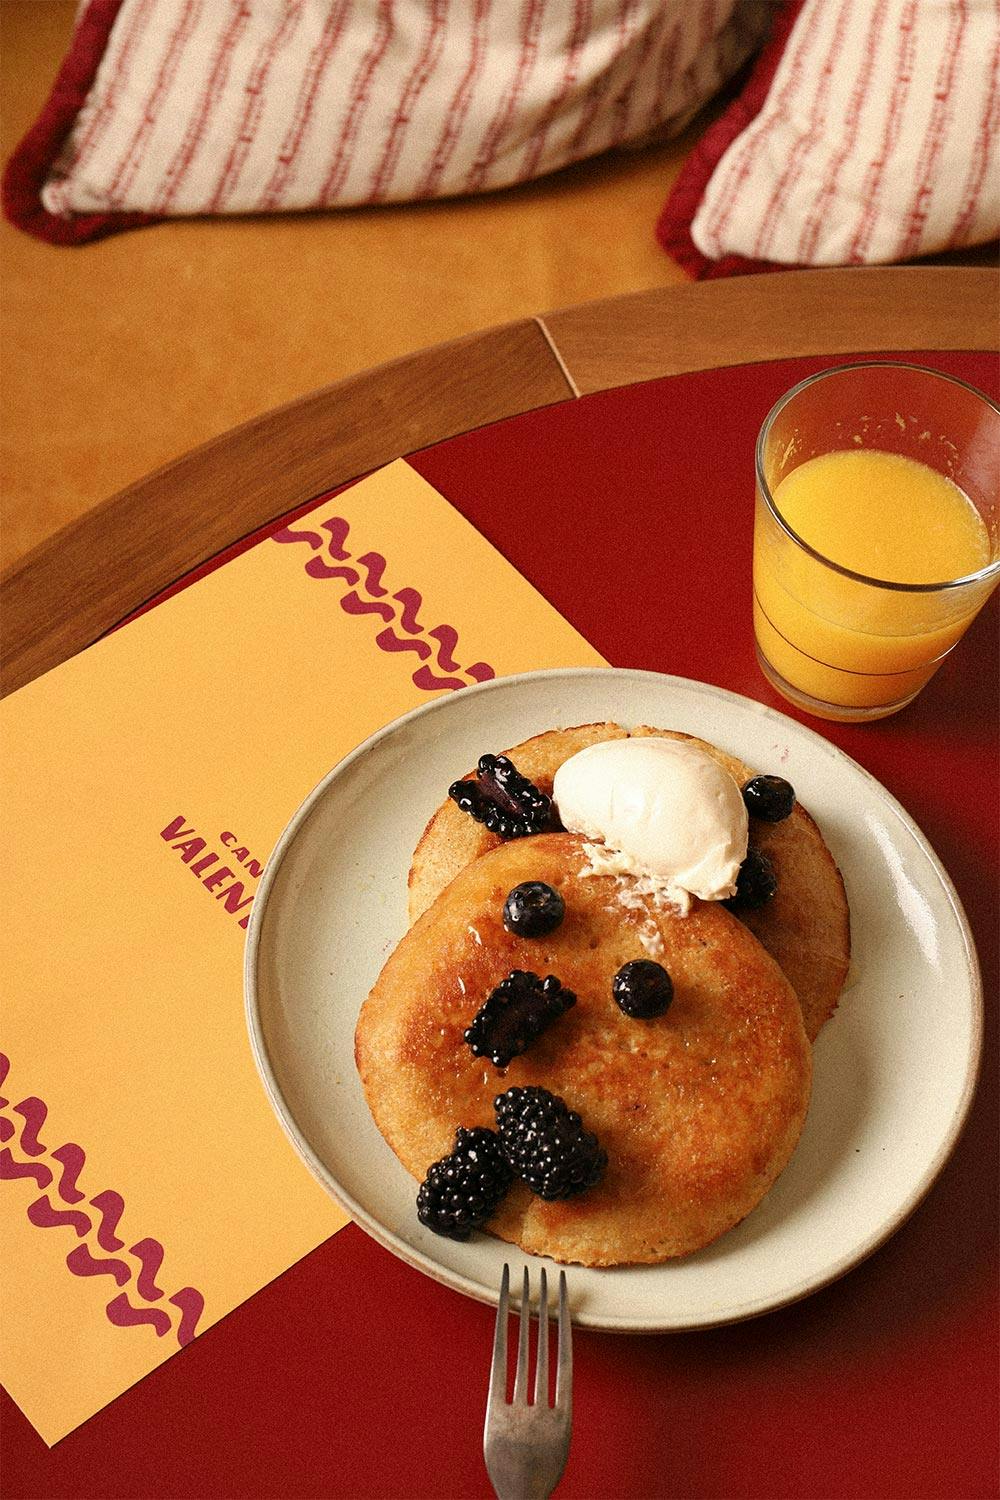 A breakfast of pancakes, blackberries, ice cream and orange juice.